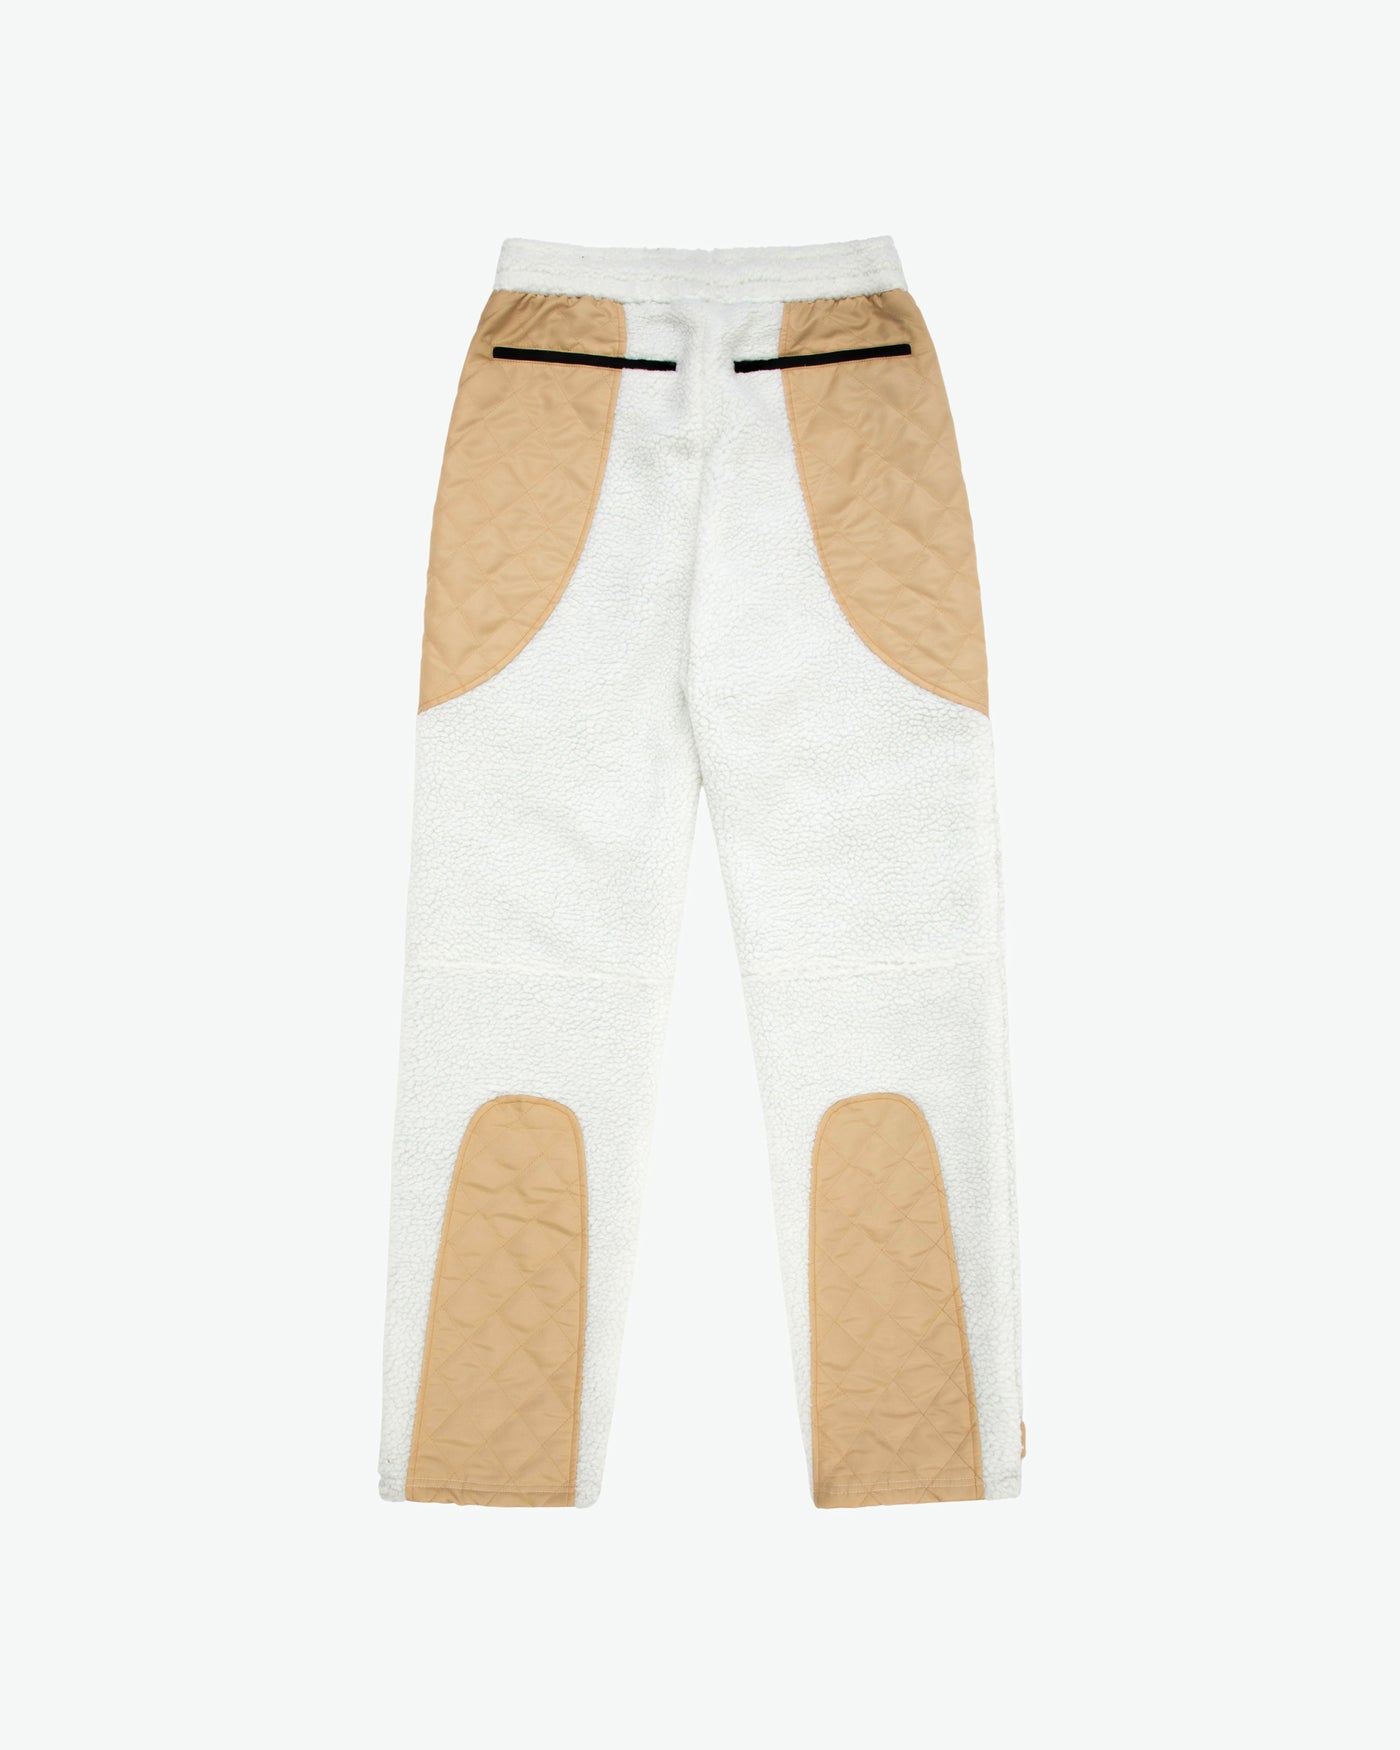 FRONTIER LUX SHERPA PANTS/ WHITE / TAN